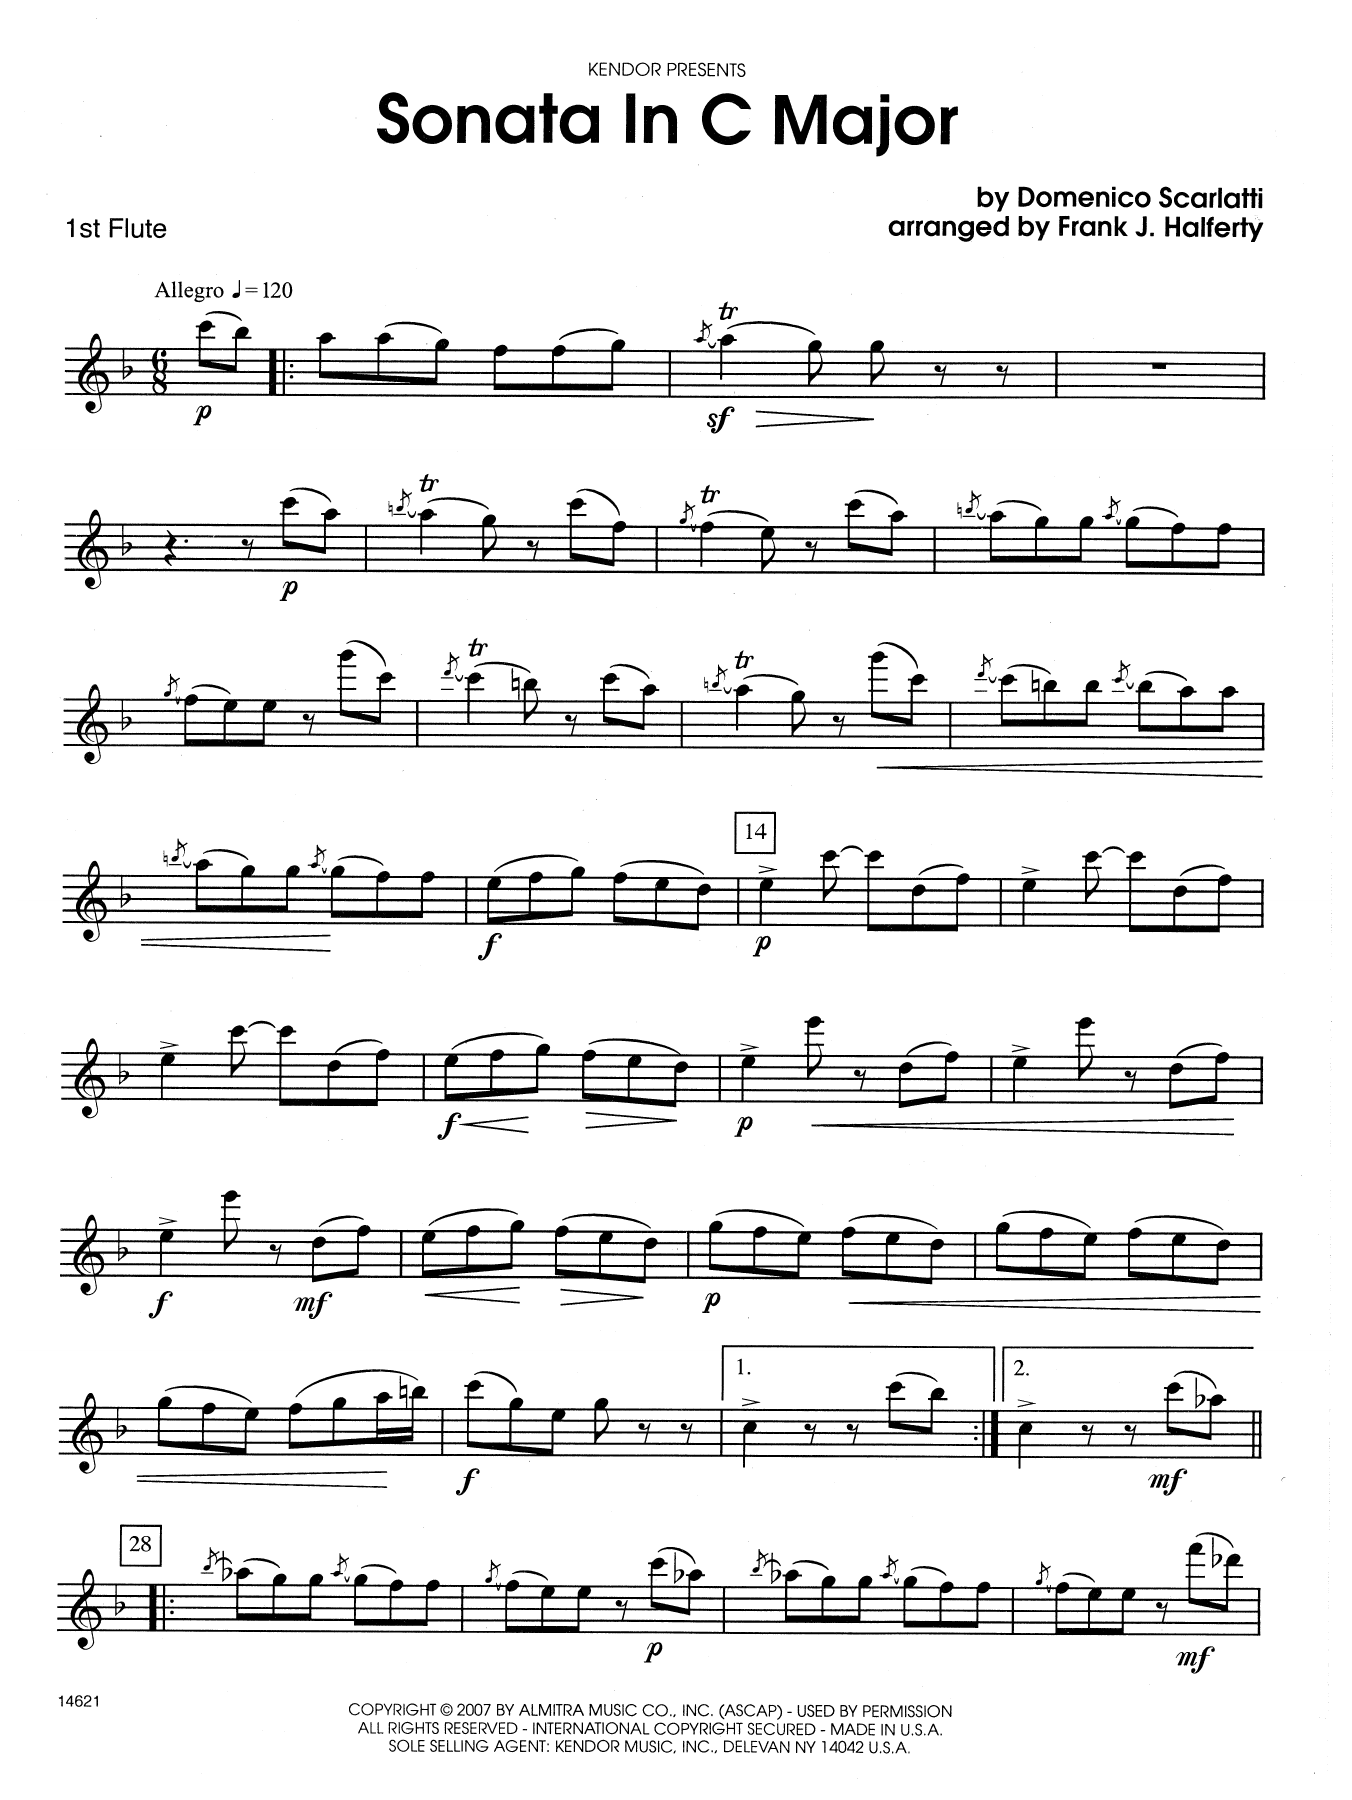 Download Frank J. Halferty Sonata in C Major - 1st Flute Sheet Music